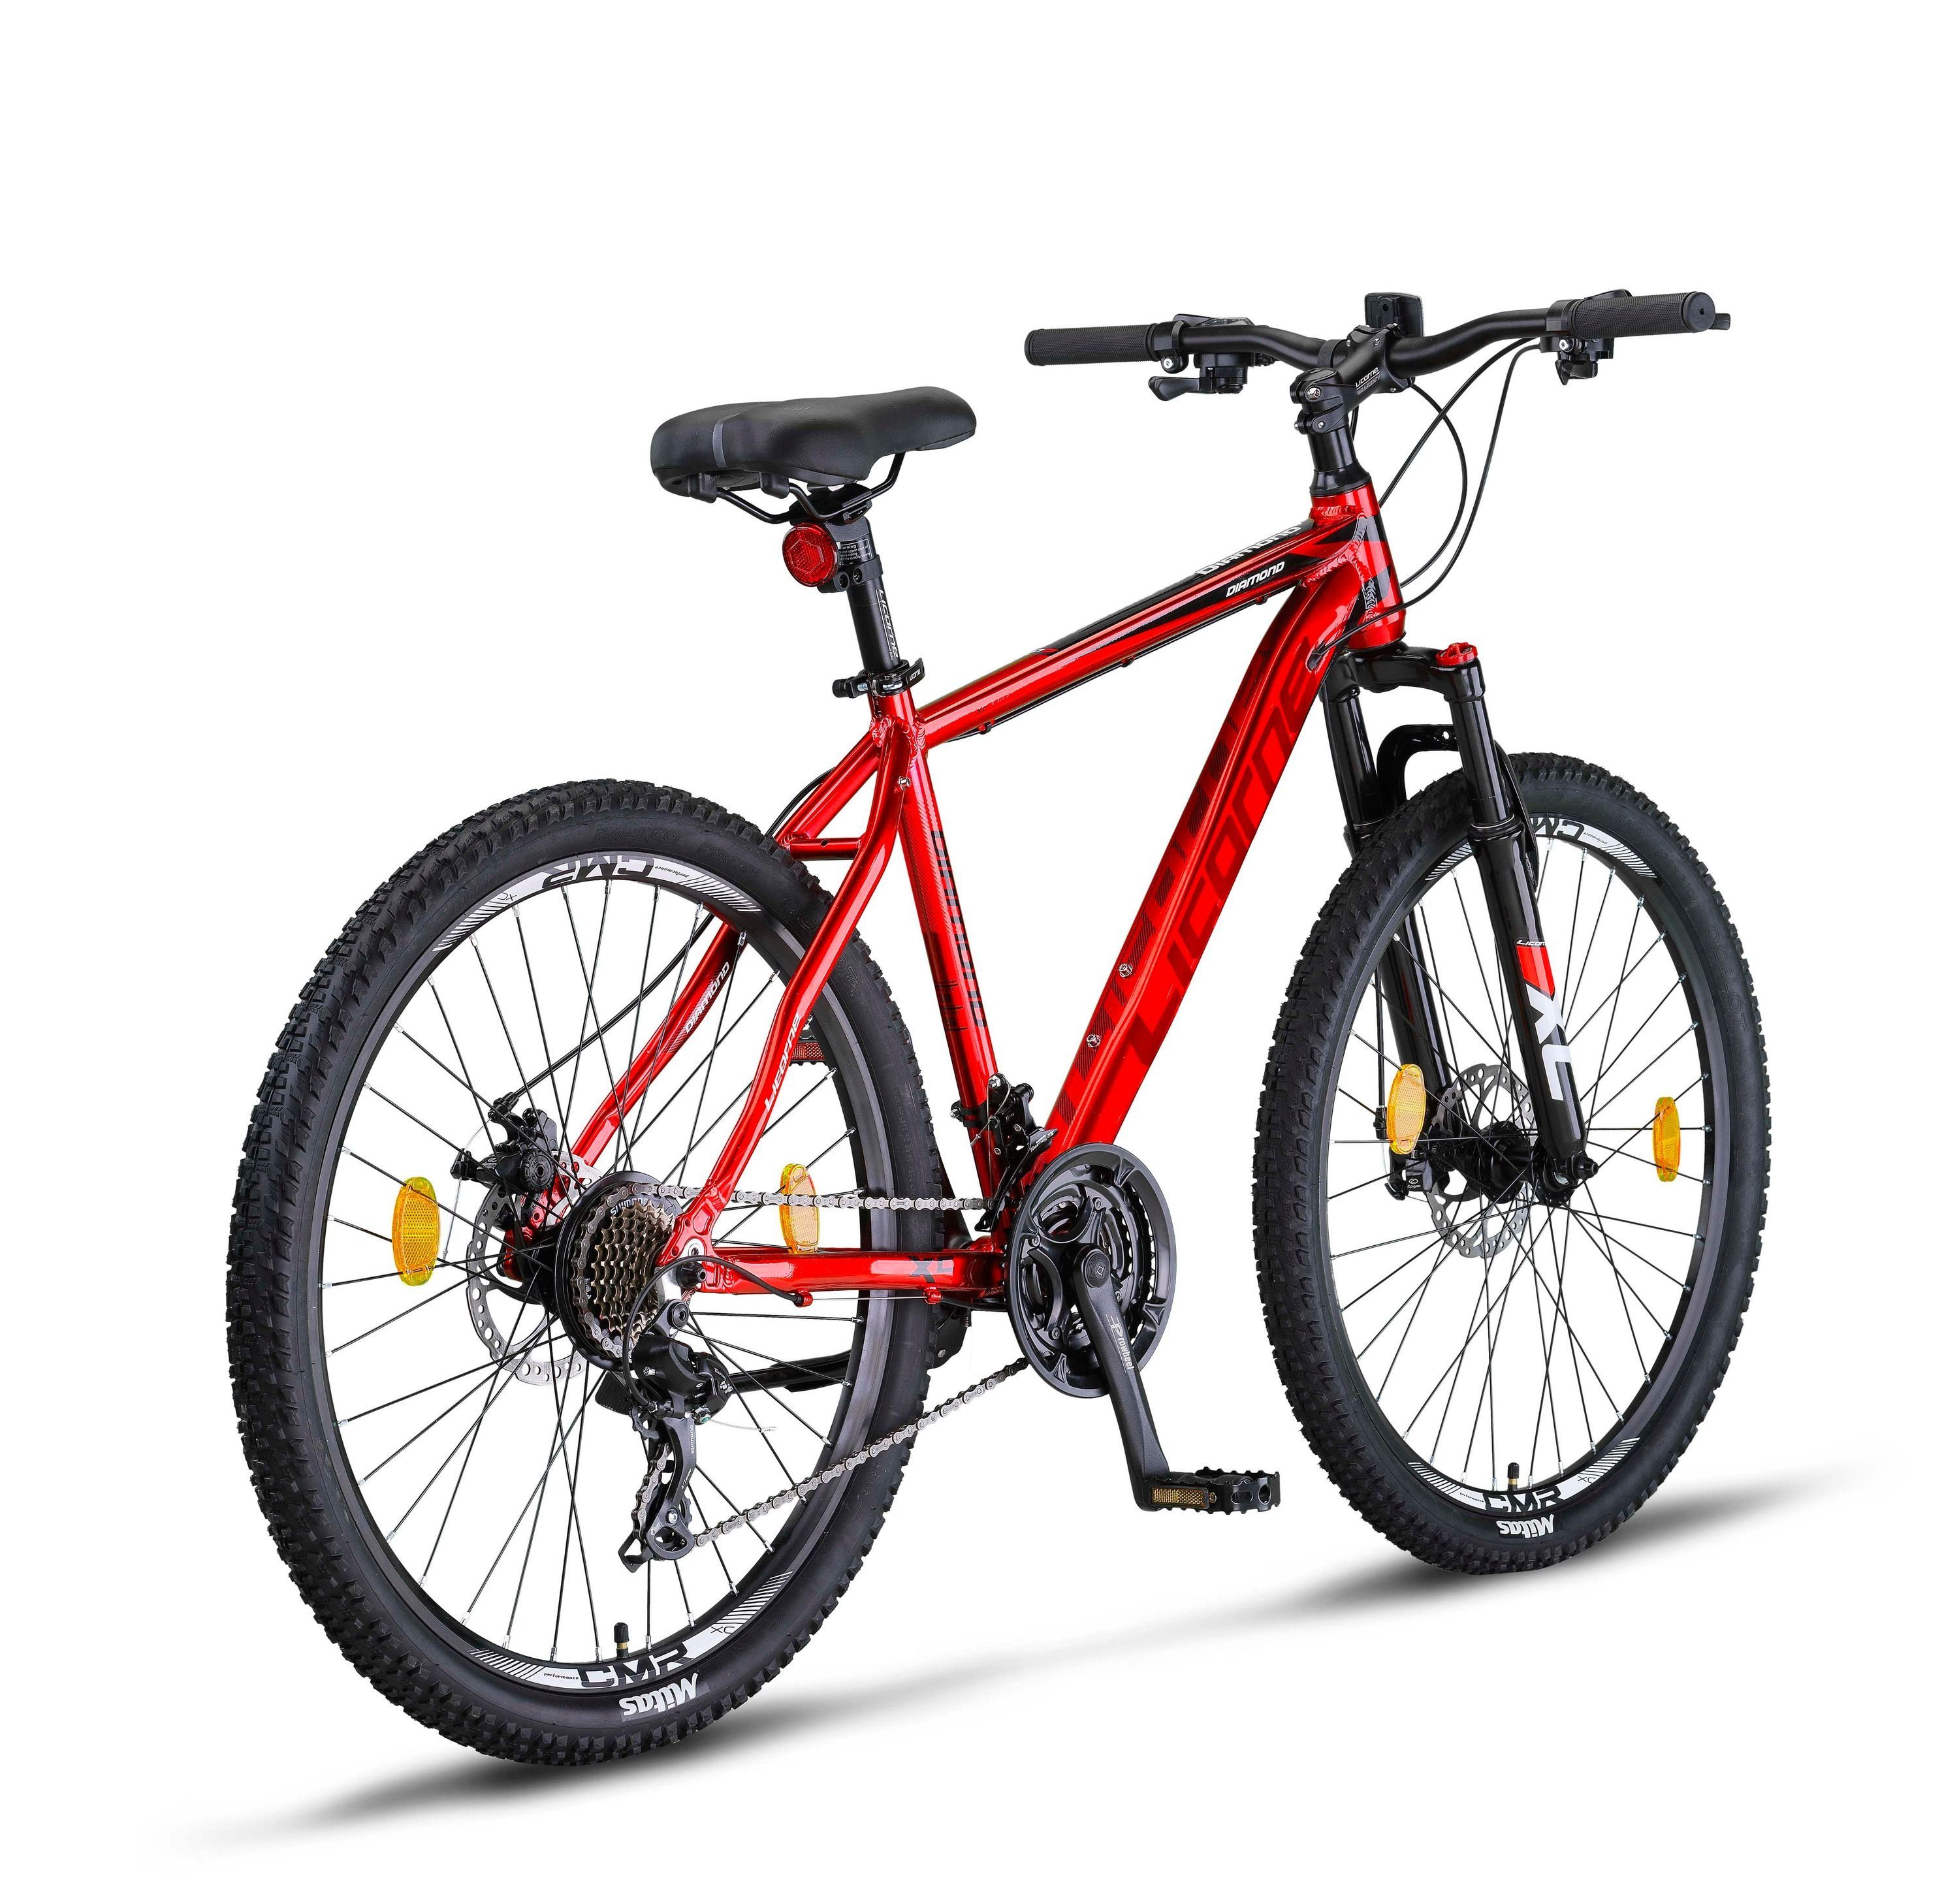 21 Diamond Licorne Zoll, 26, Premium 29 Alu Mountainbike Bike Rot Licorne und 27.5 Mountainbike Gang Bike